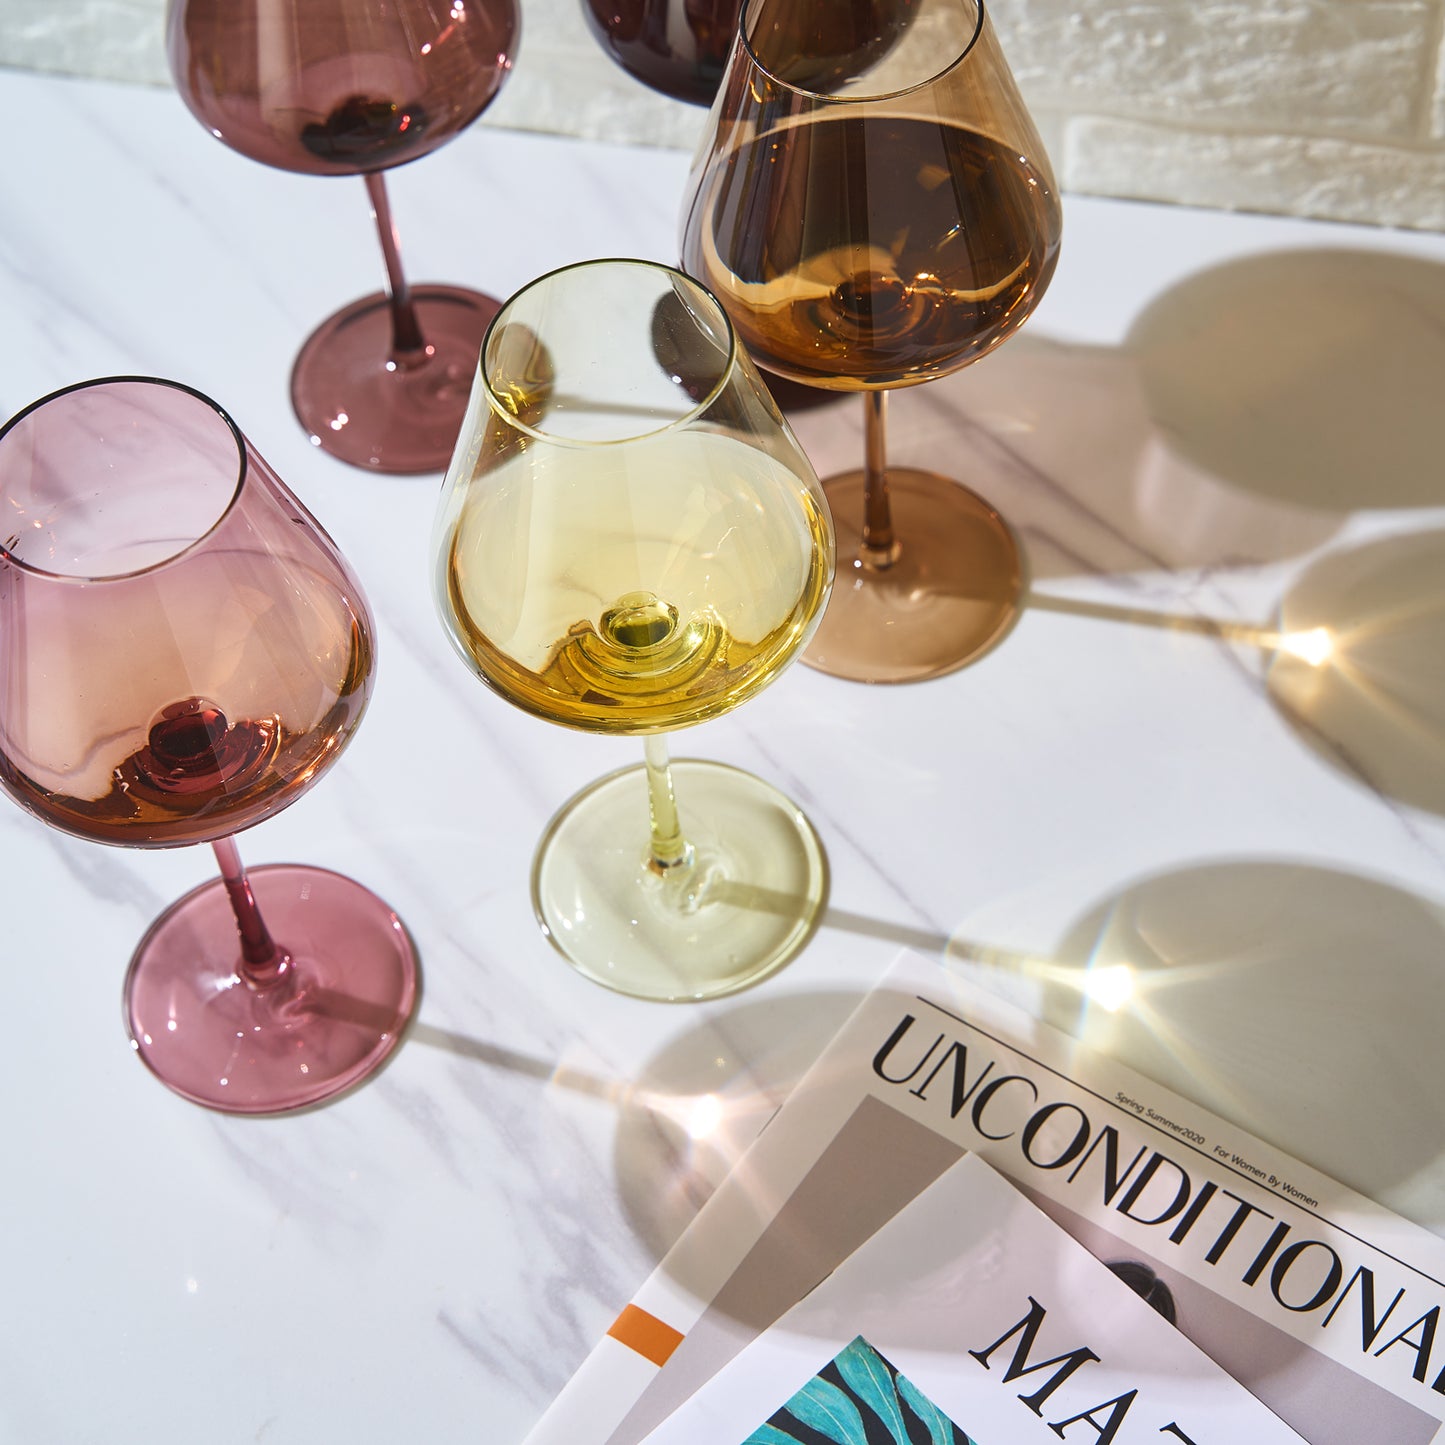 Stagioni Wine Glassware, Set of 5, "September"